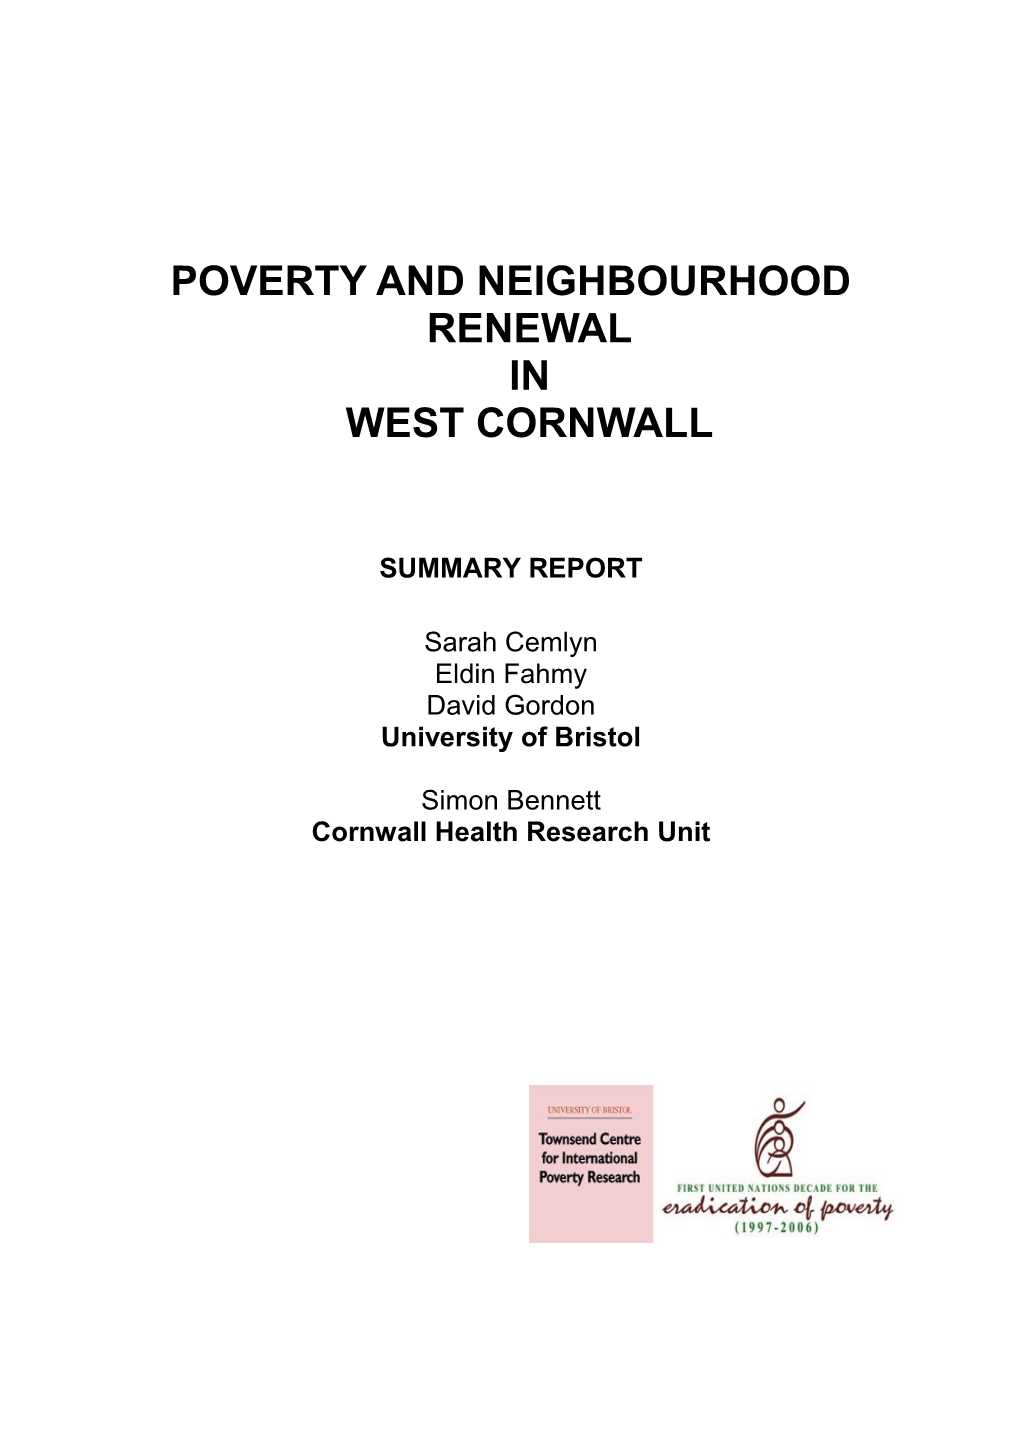 Poverty and Neighbourhood Renewal in West Cornwall